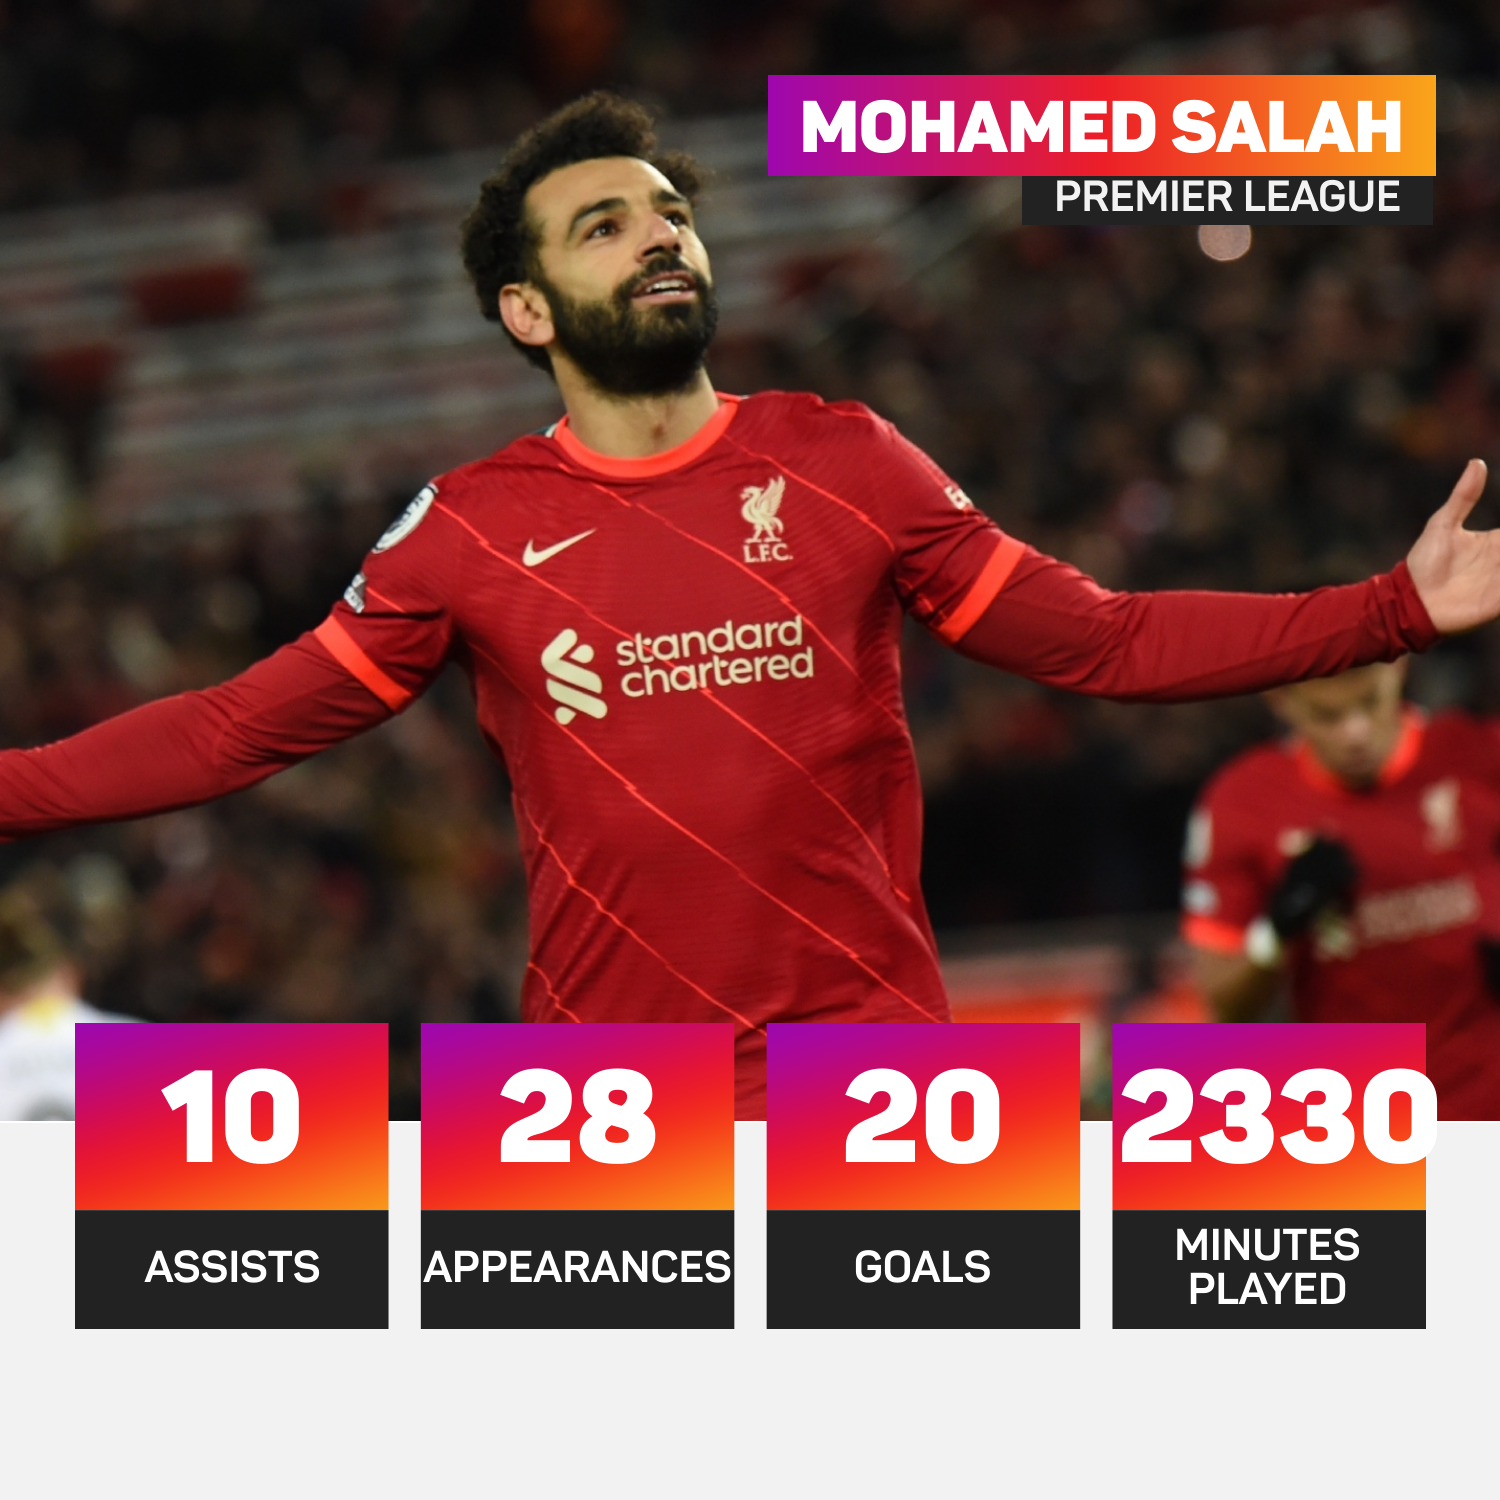 Mohamed Salah has 20 Premier League goals this season